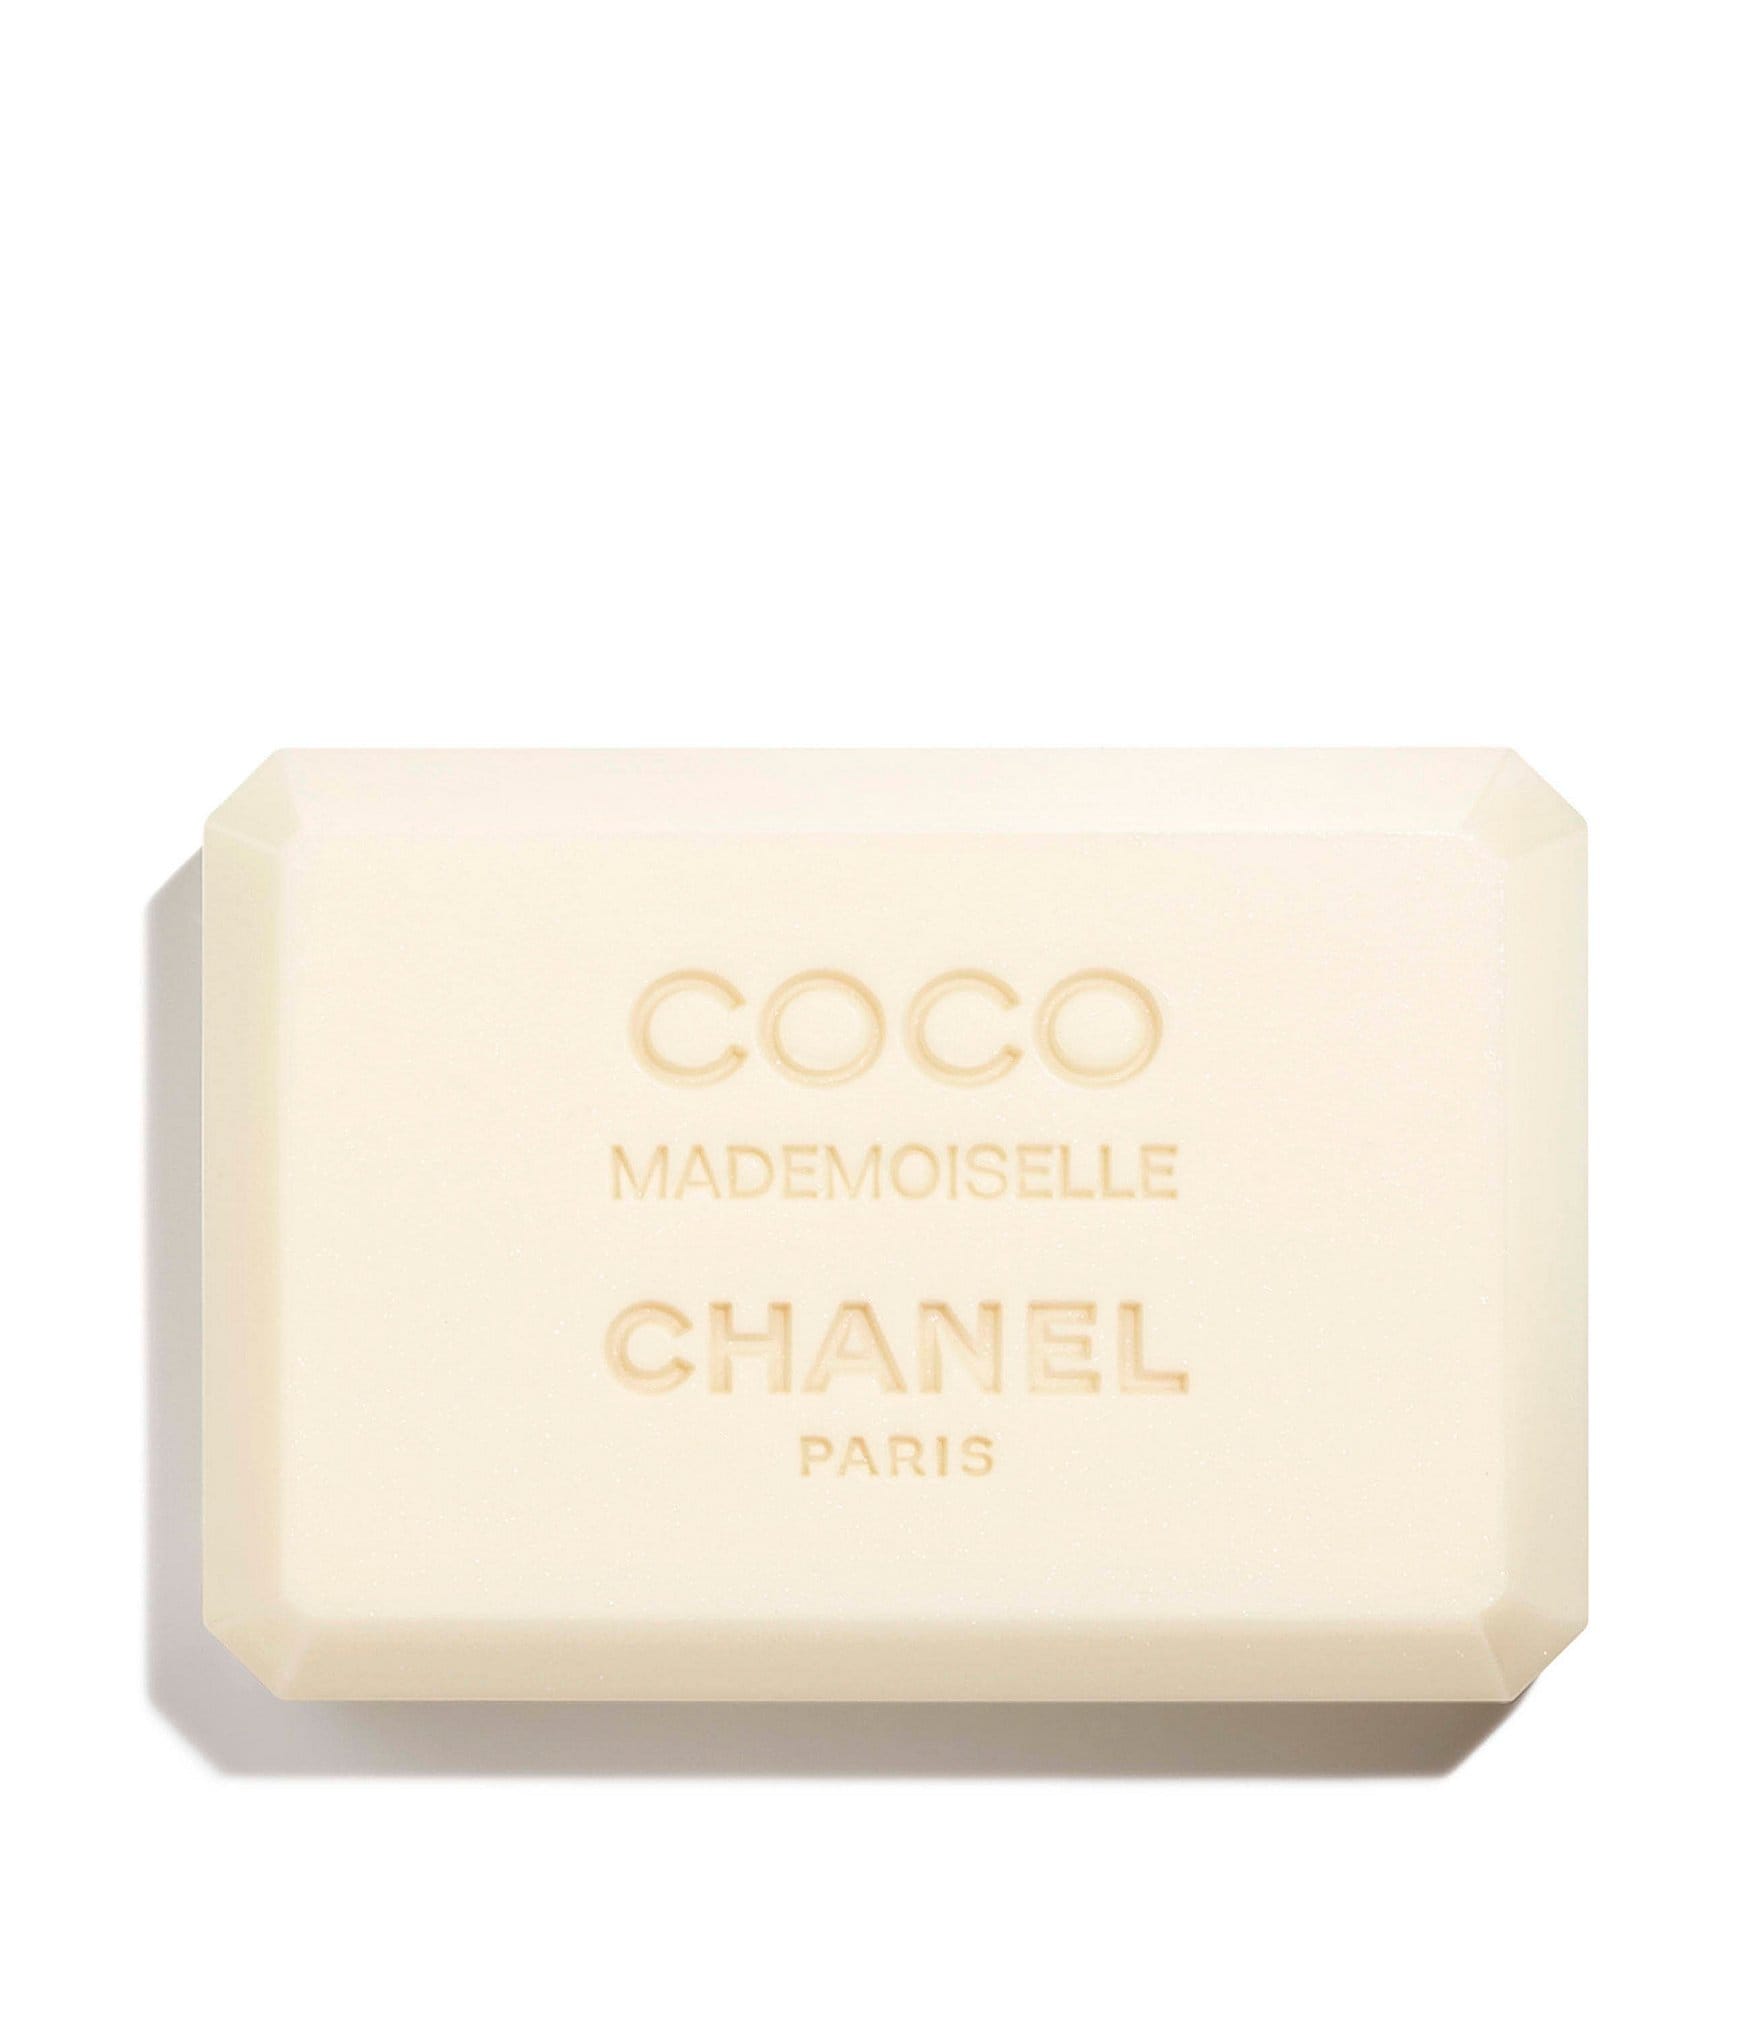 Chanel Coco Mademoiselle Fresh Bath Soap Dillard S